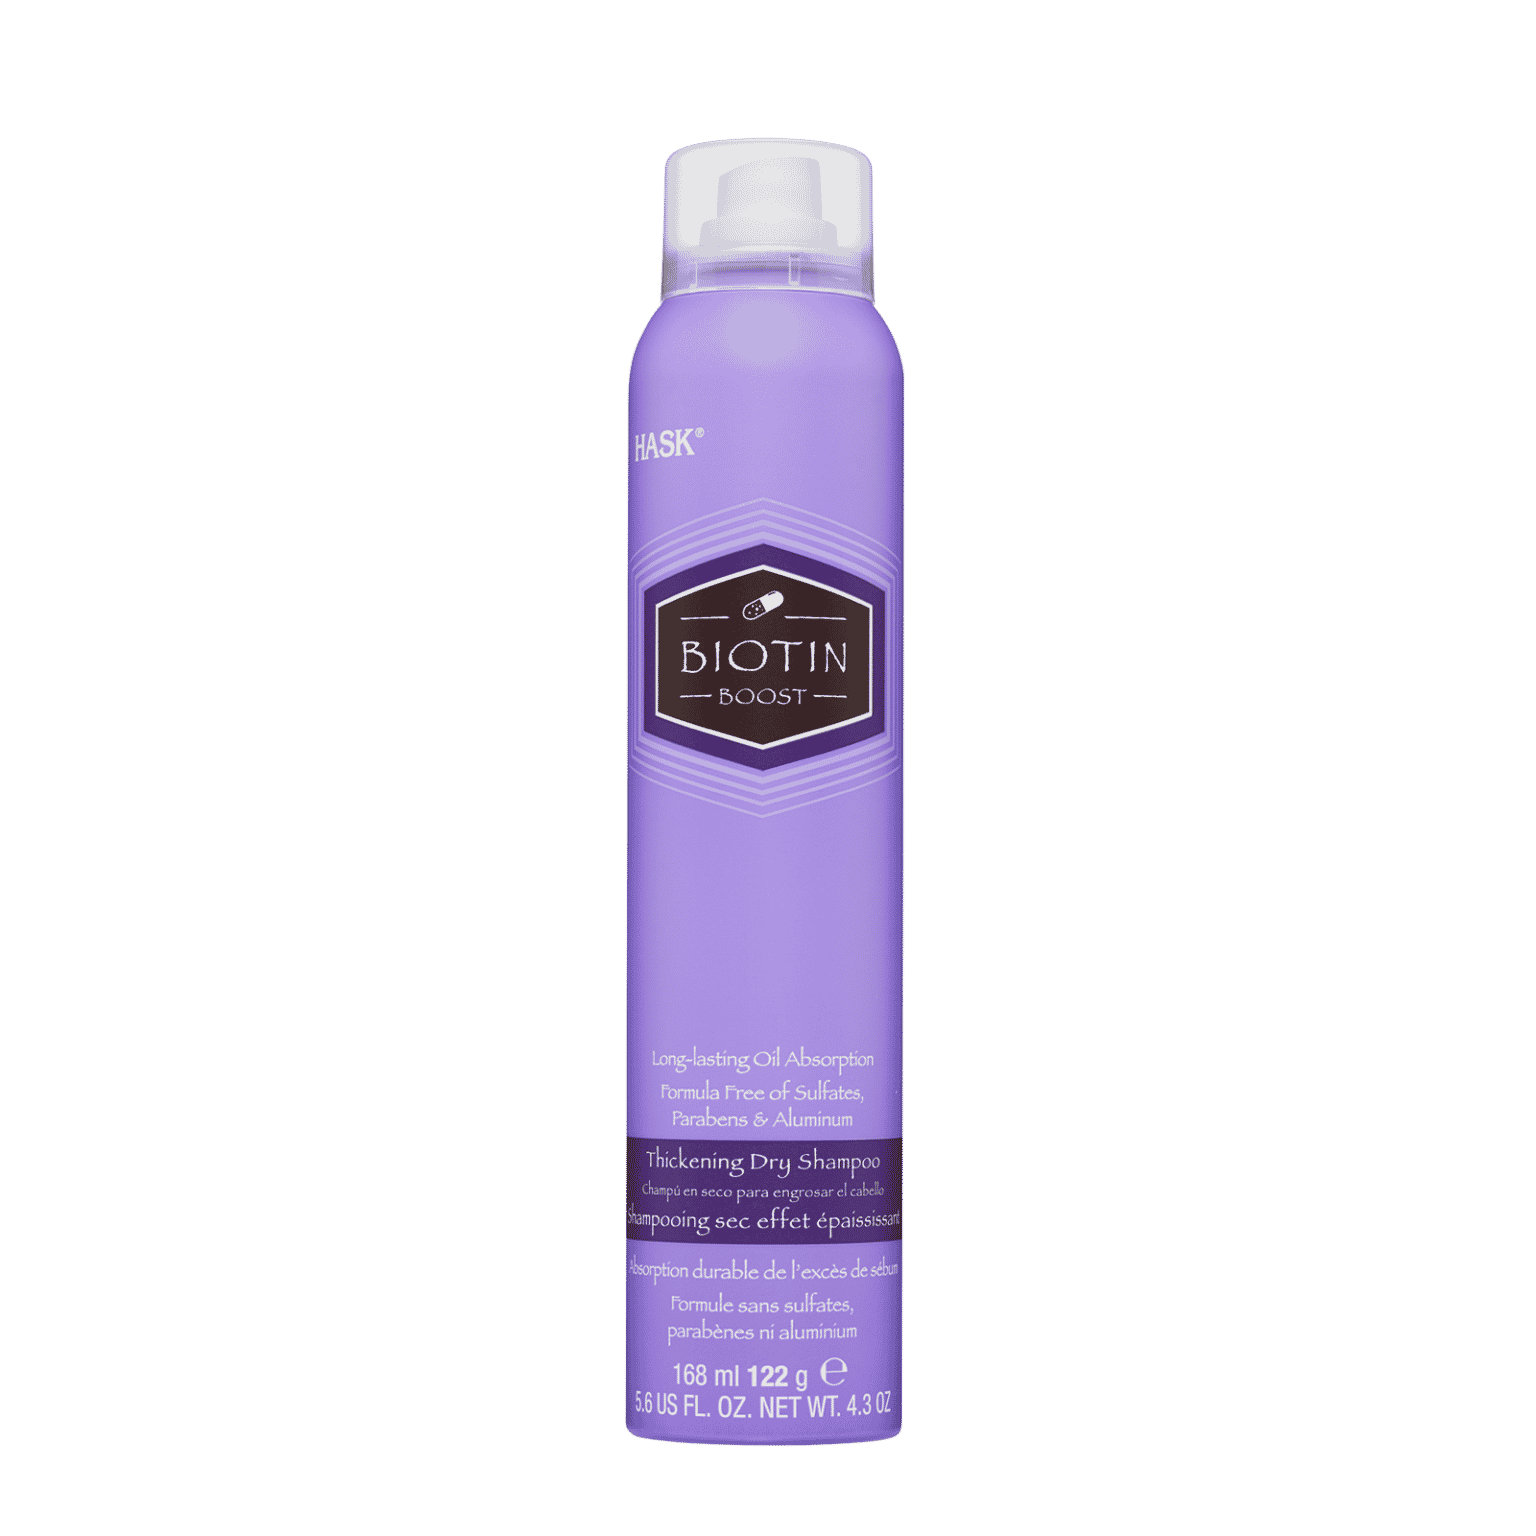 HASK BIOTIN BOOST – Thickening Dry Shampoo (Shampooing Sec effet épaississant) 122 g